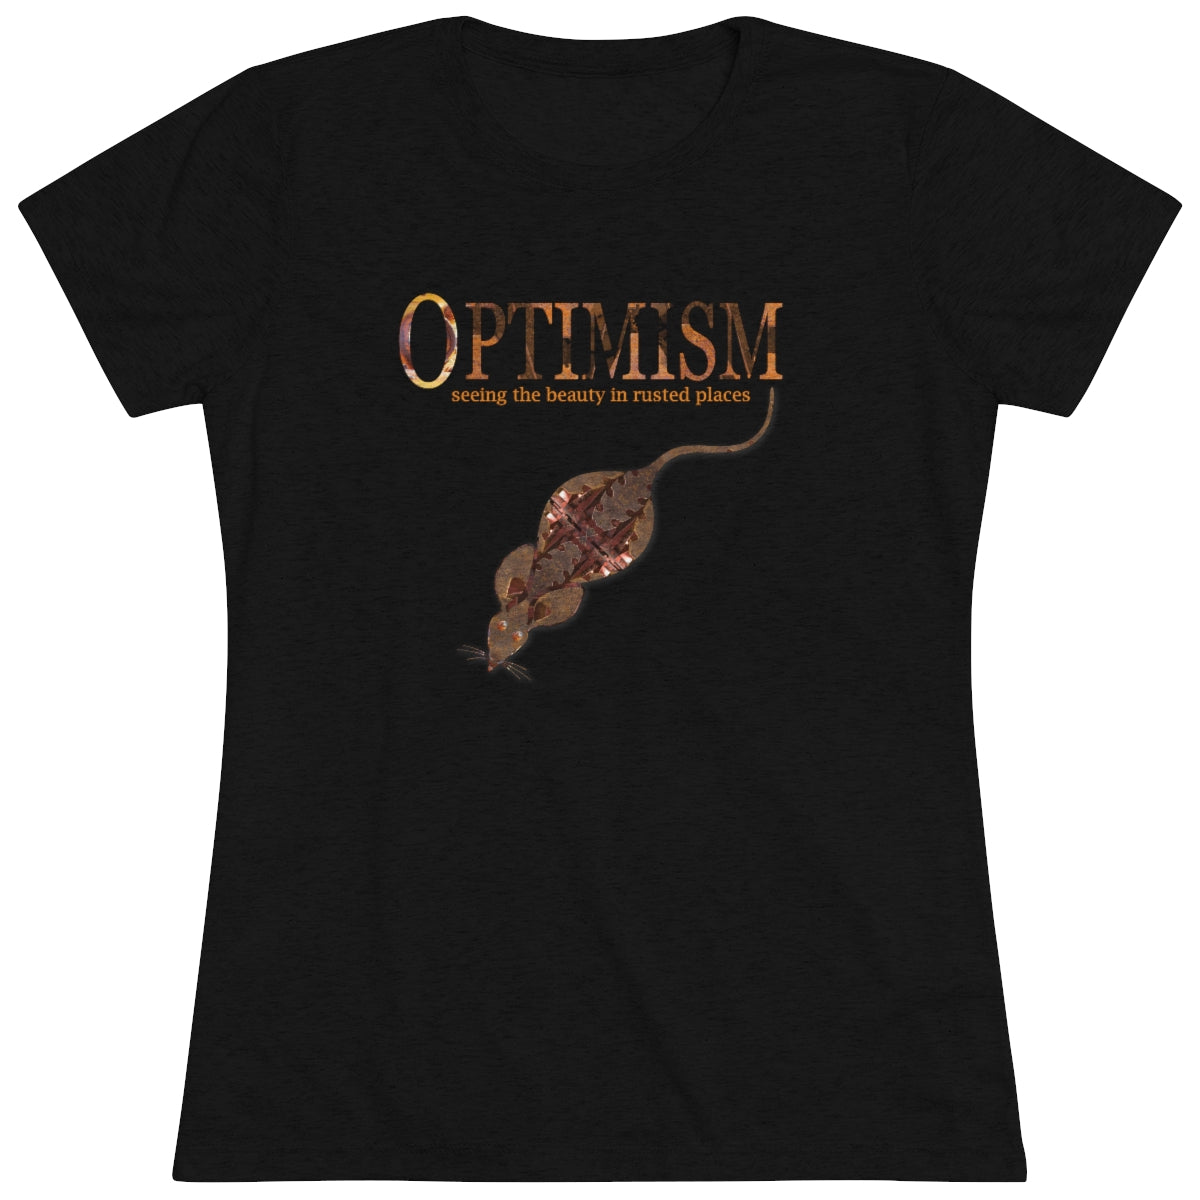 Women's Triblend Tee - Optimism Bureau[c]rat